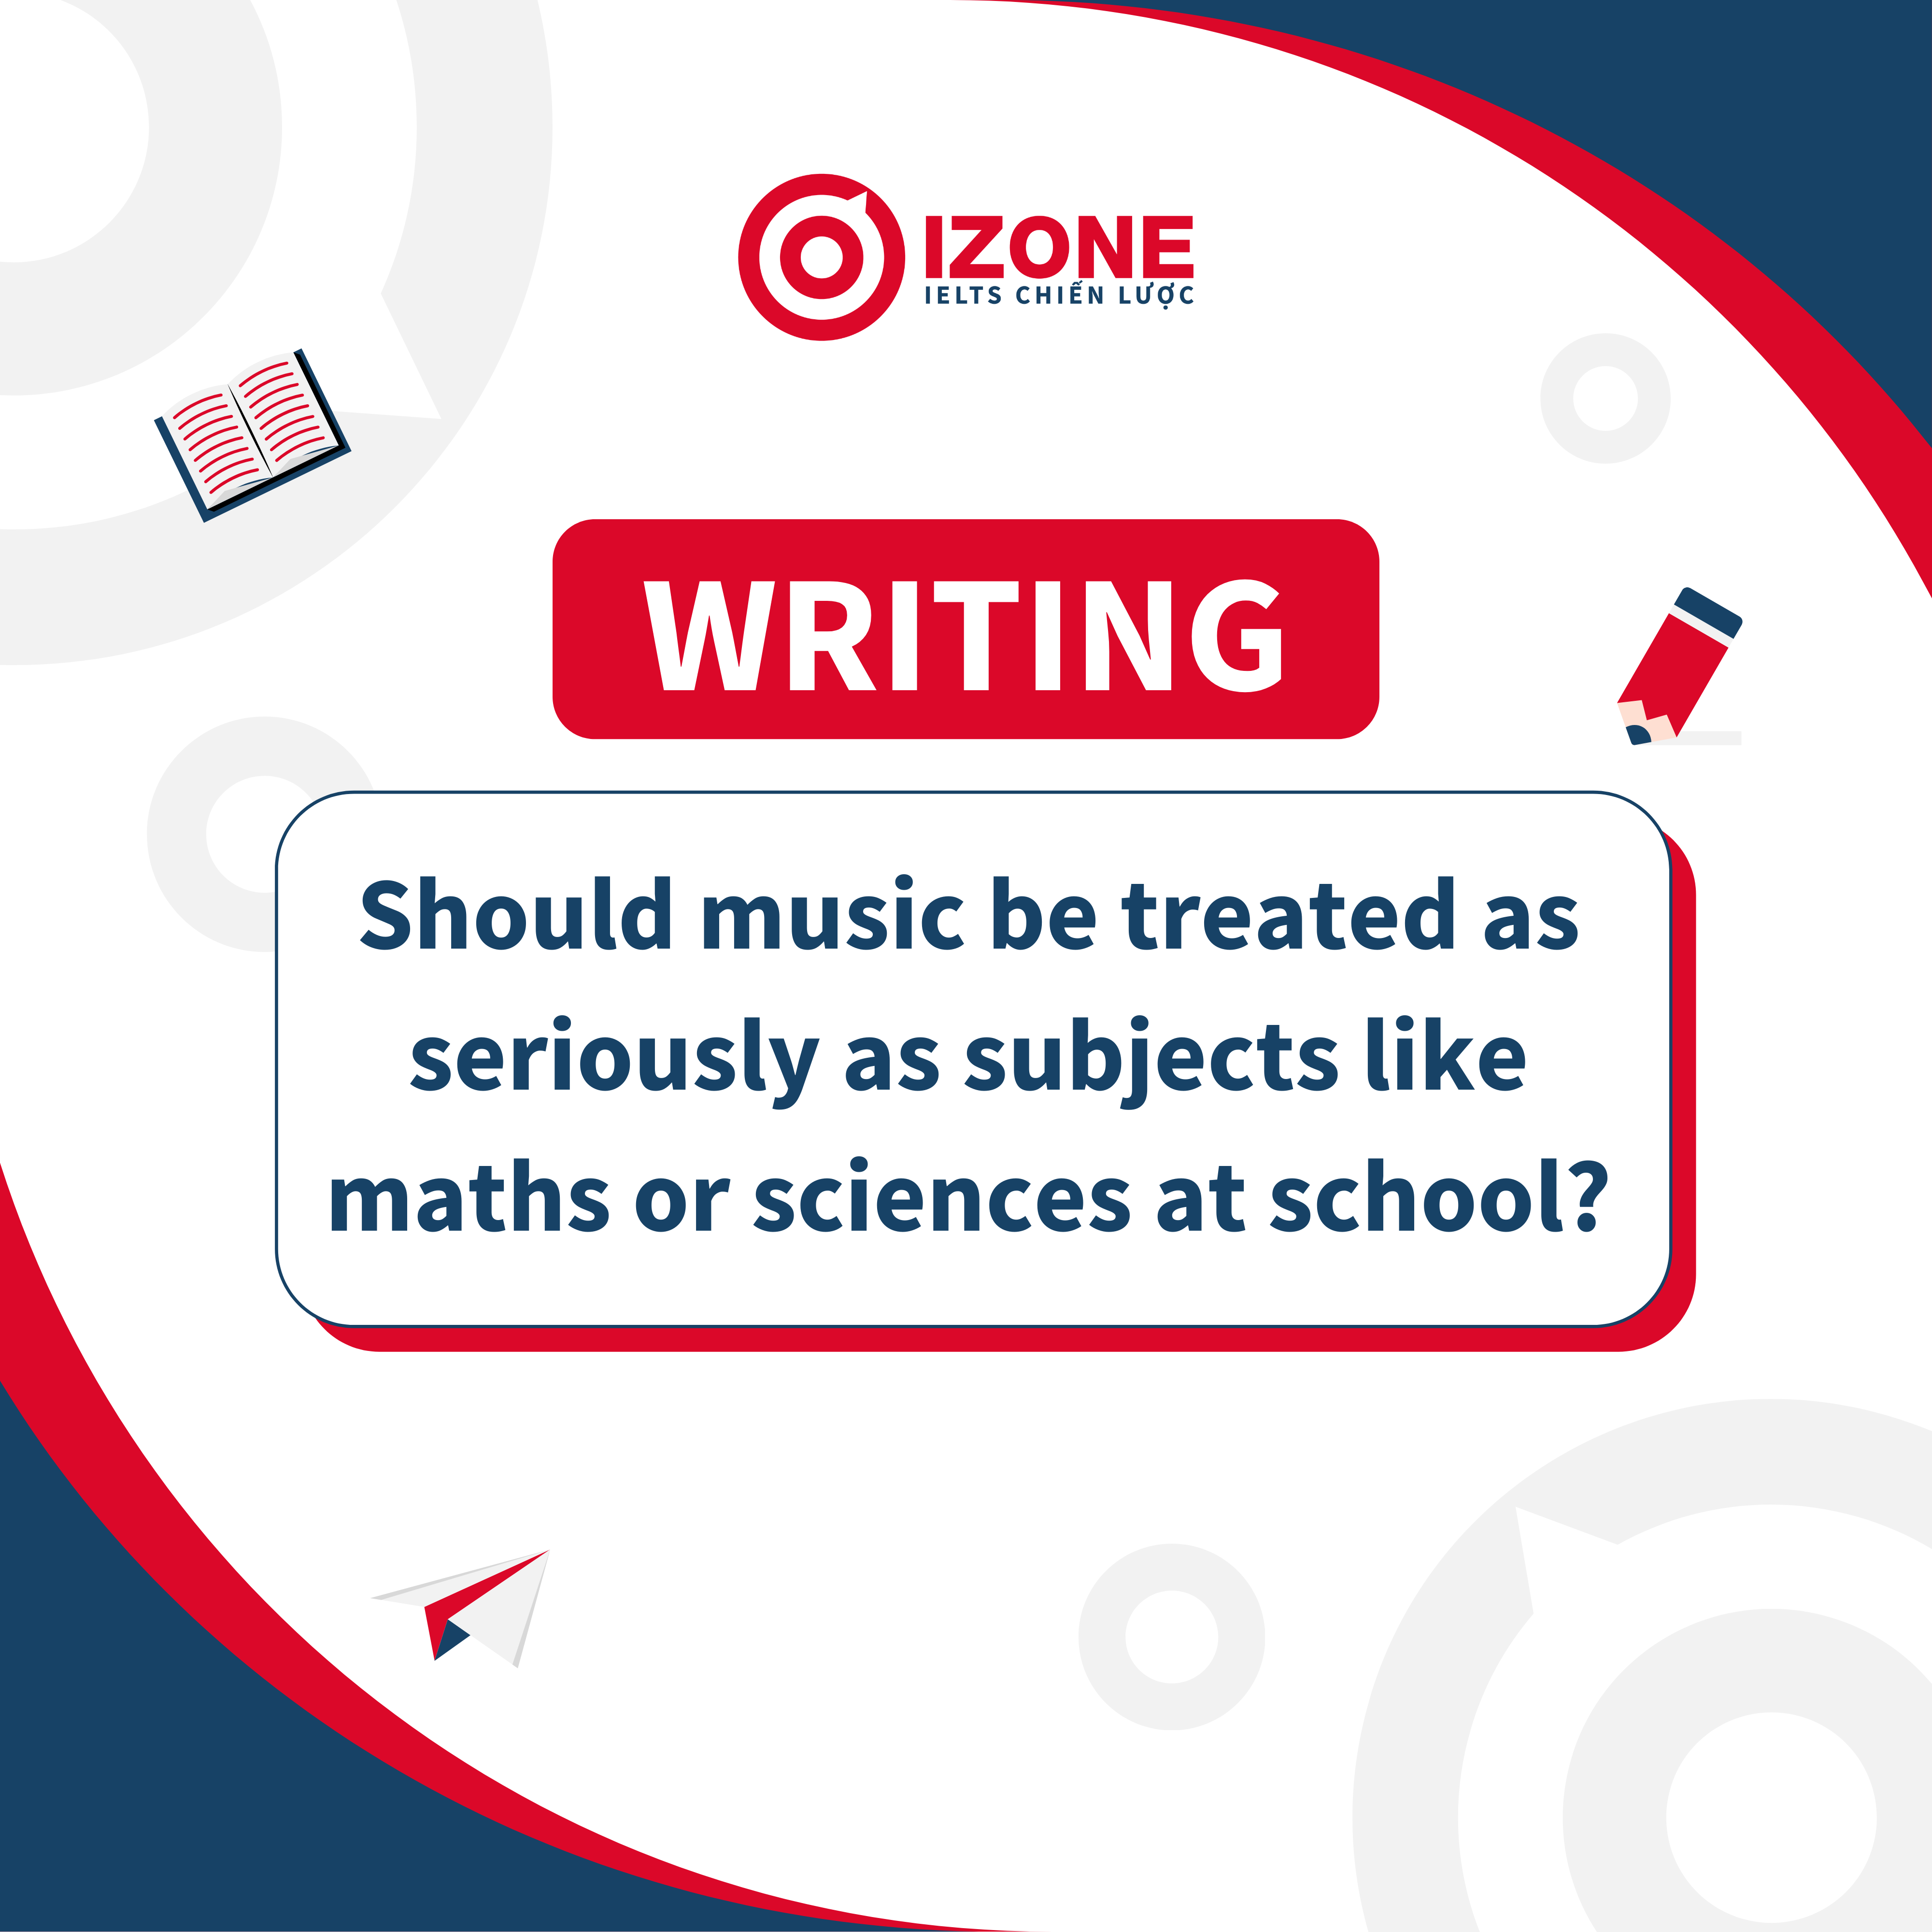 Cách triển khai câu hỏi “Should music be treated as seriously as subjects like maths or sciences at school?”